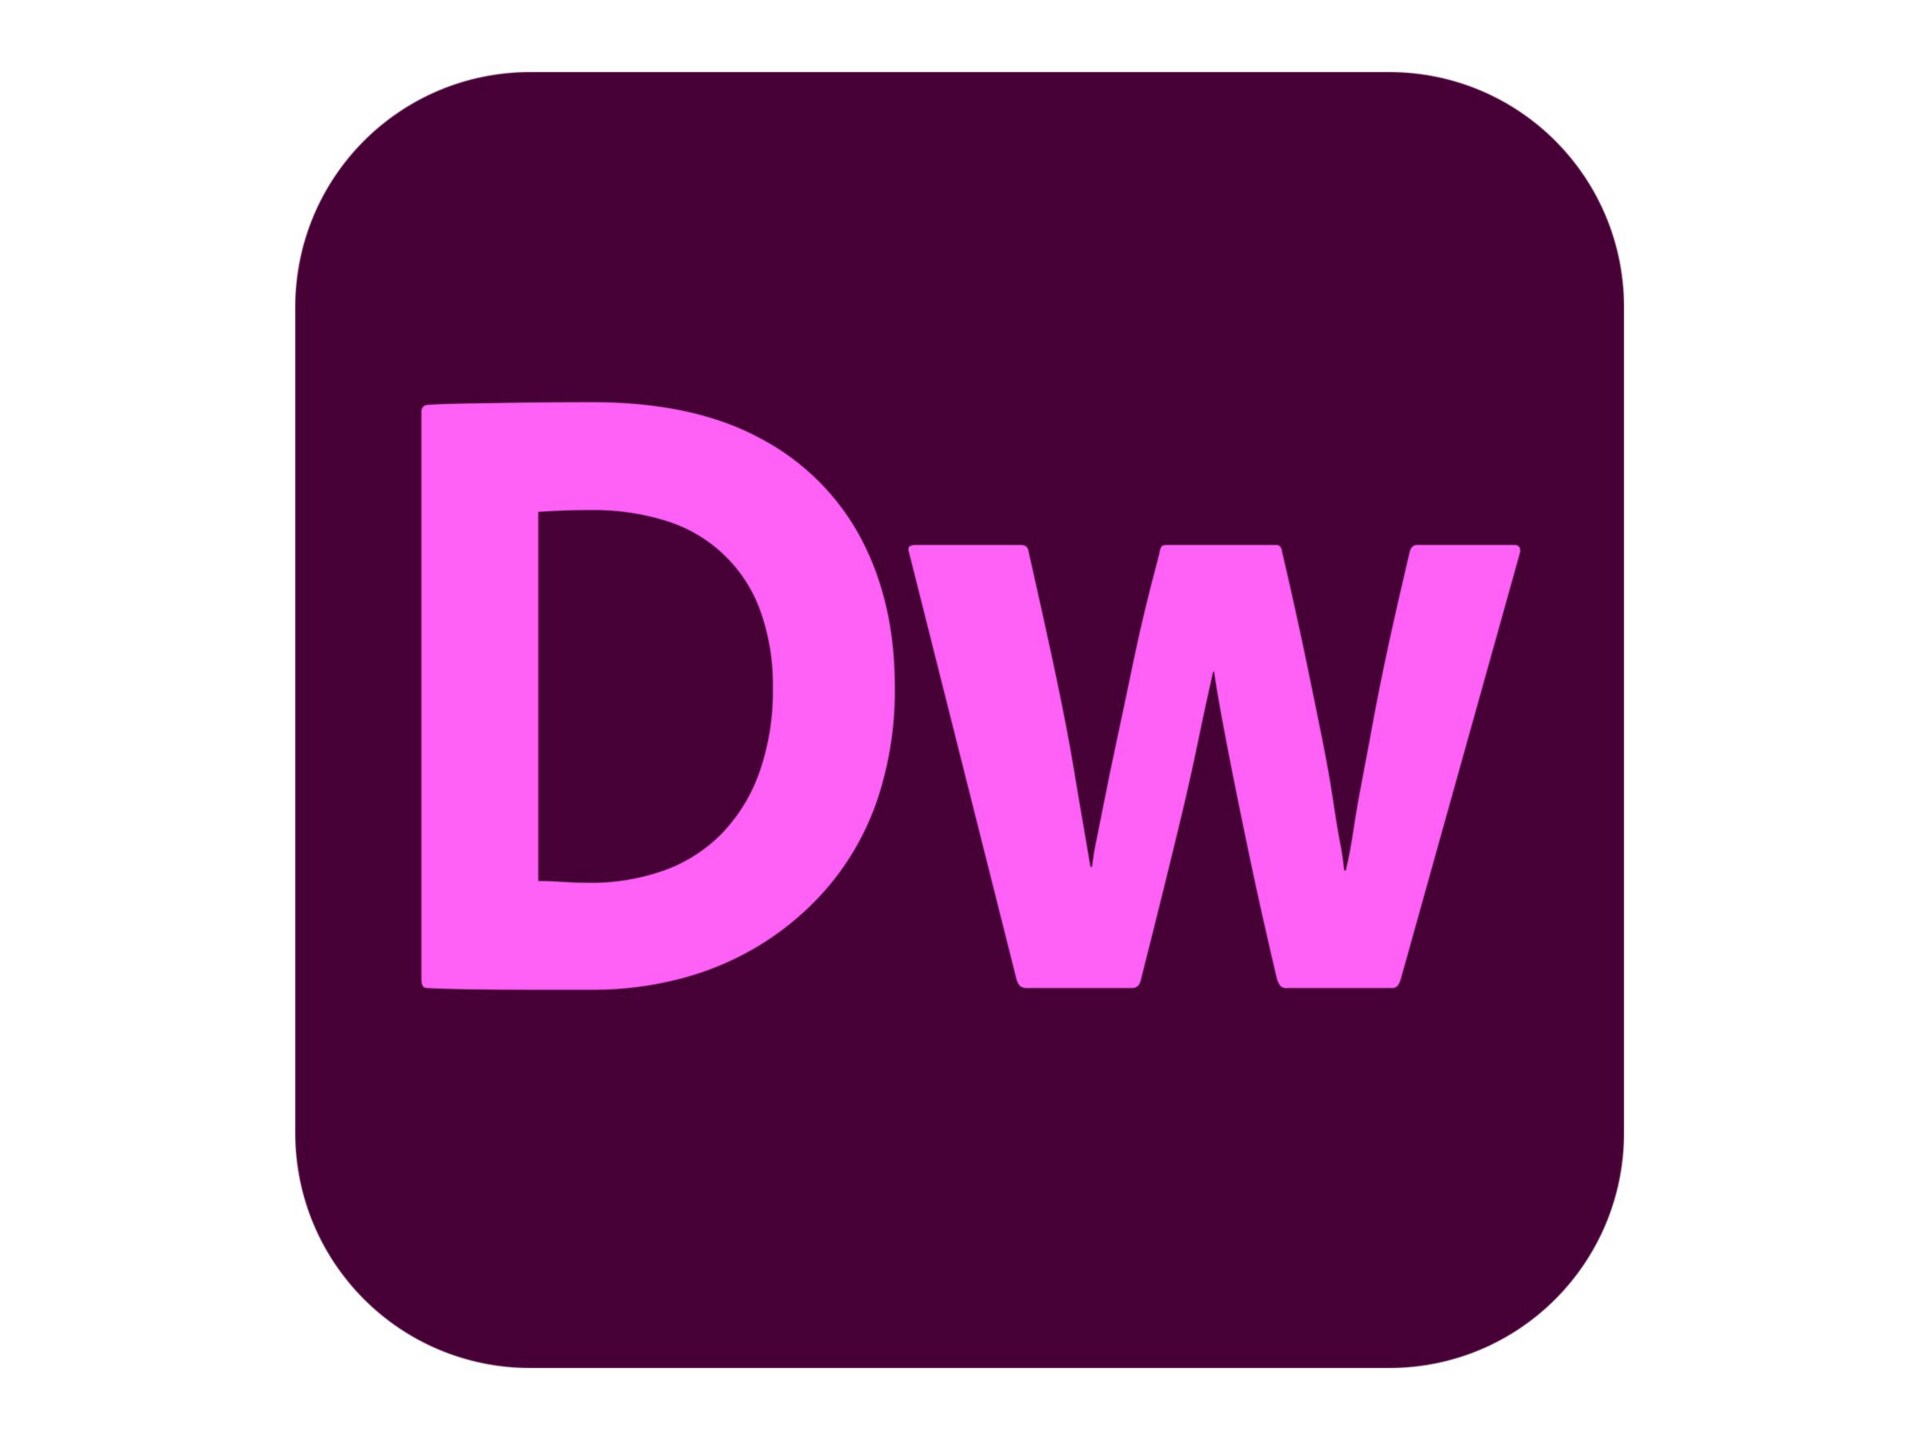 Adobe Dreamweaver CC for Enterprise - Subscription New (15 months) - 1 name